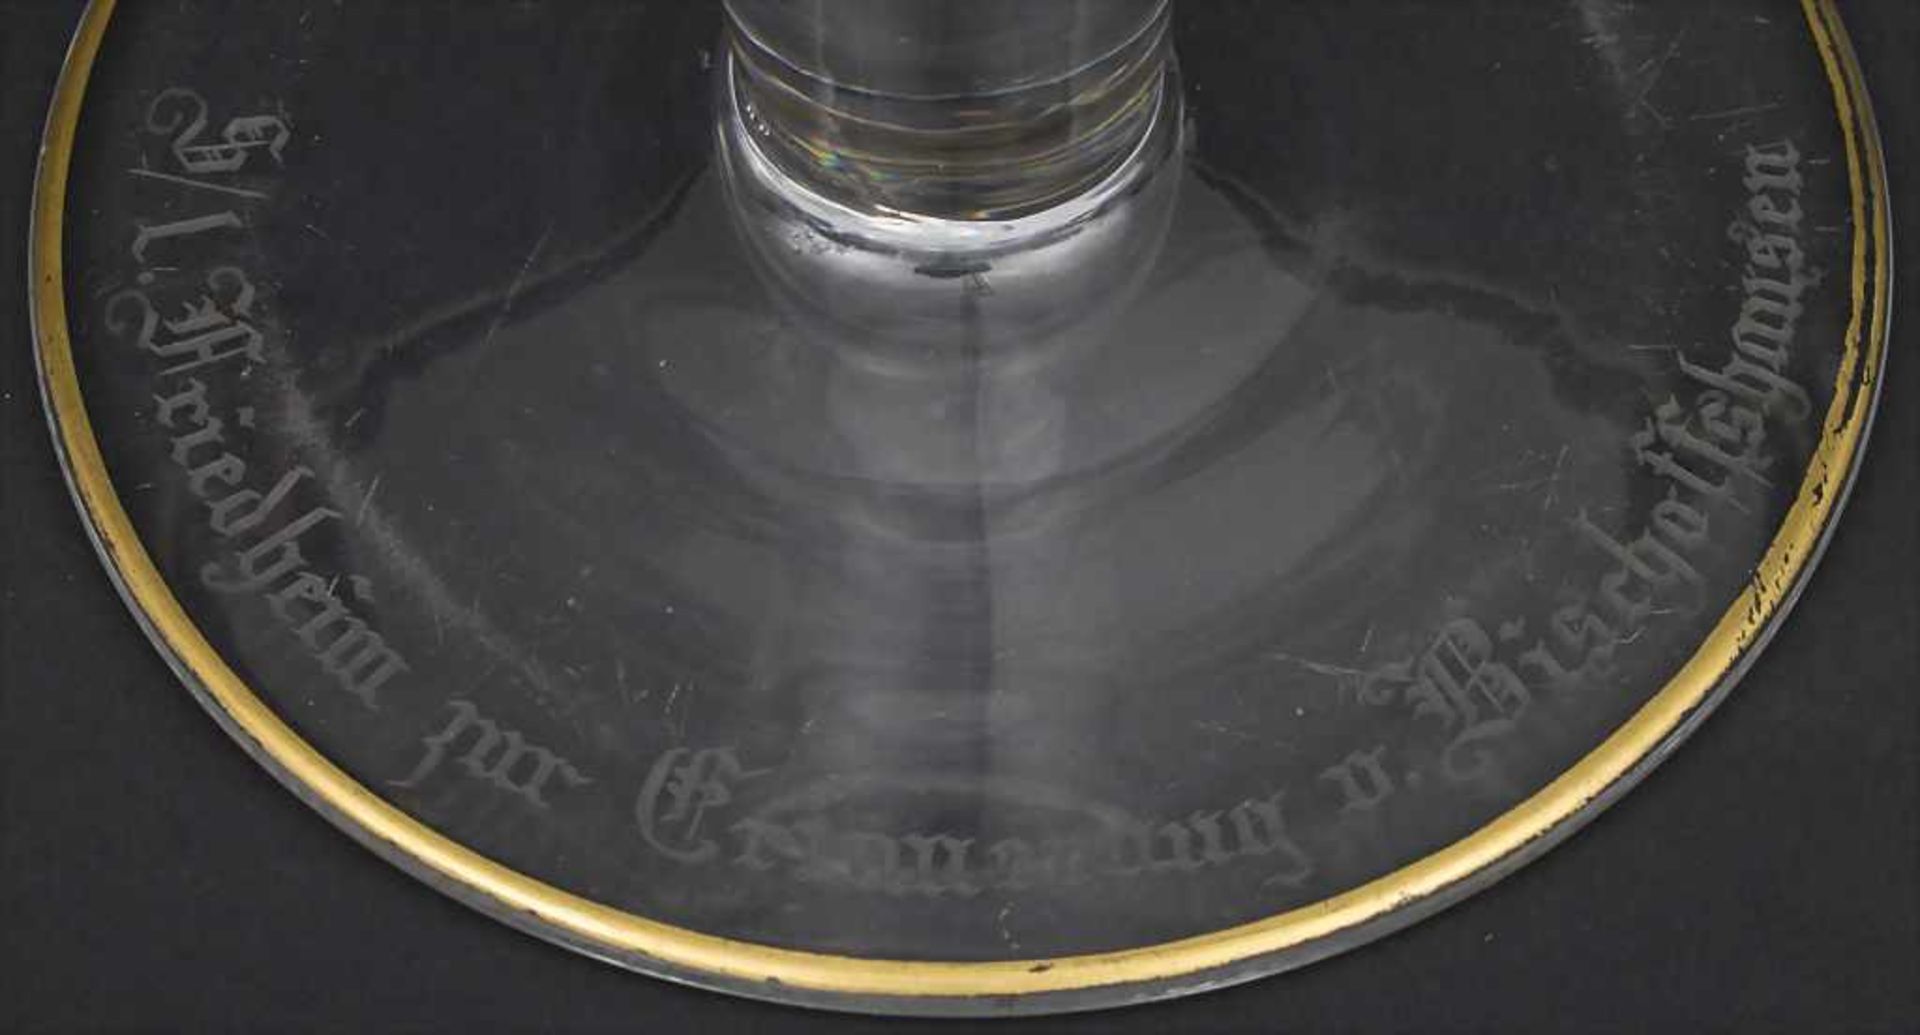 Großes Pokalglas mit Familienwappen / Huge Goblet with Family Coat of Arms, 19. Jh. Material: - Bild 2 aus 2